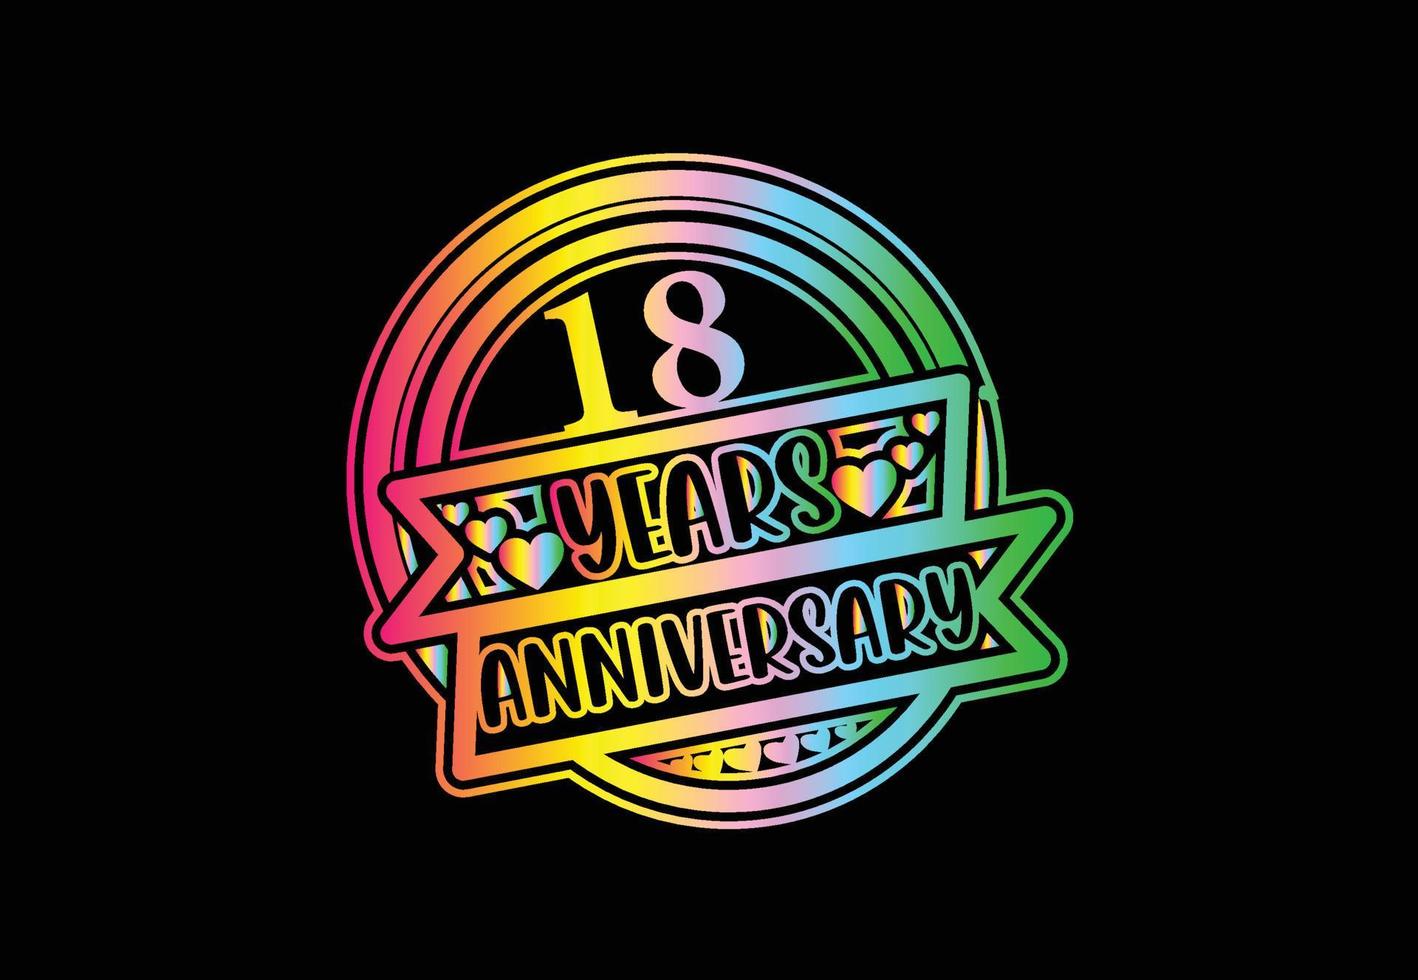 18 years anniversary logo and sticker design vector